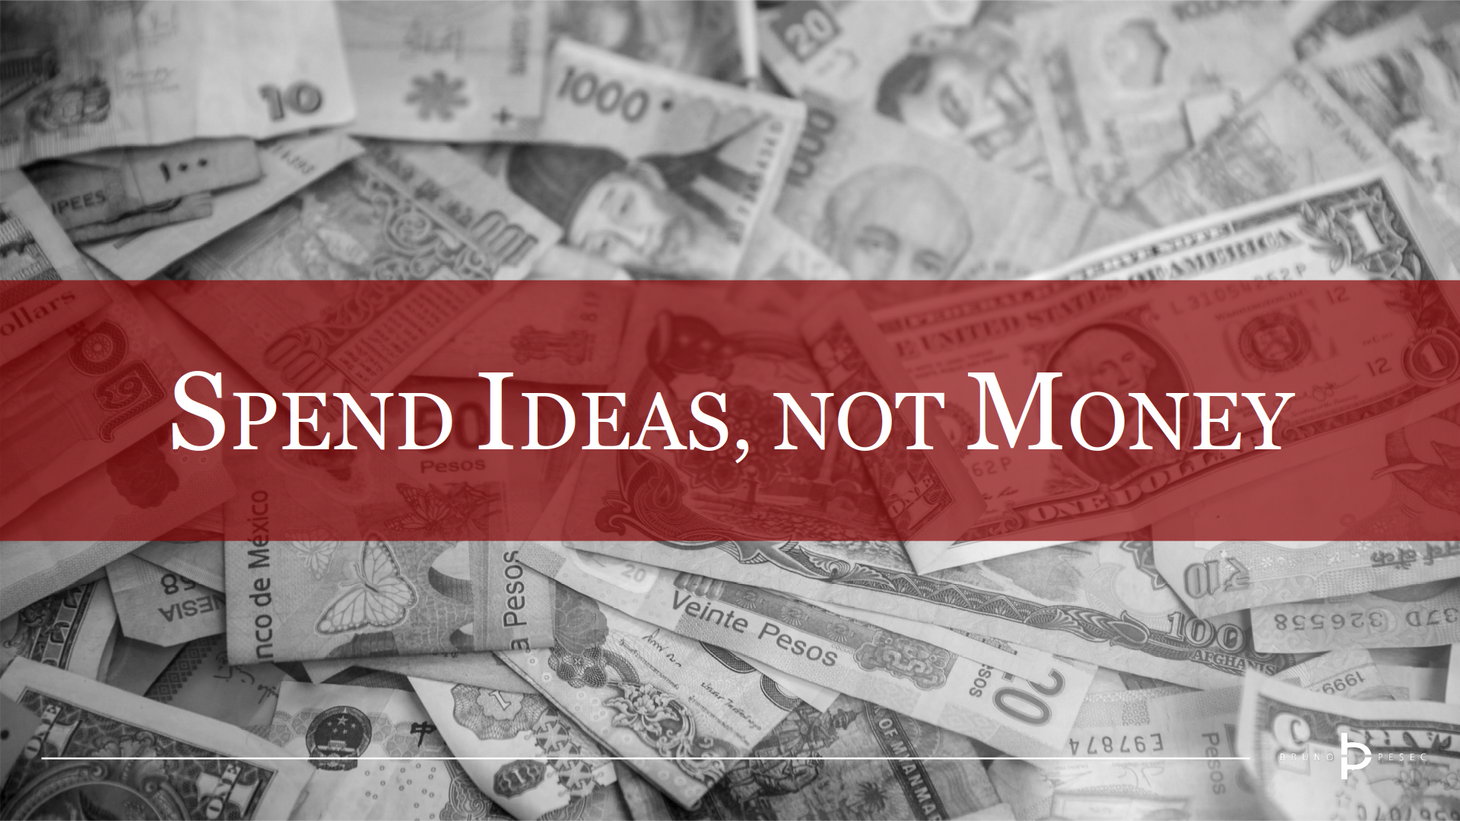 Spend ideas, not money